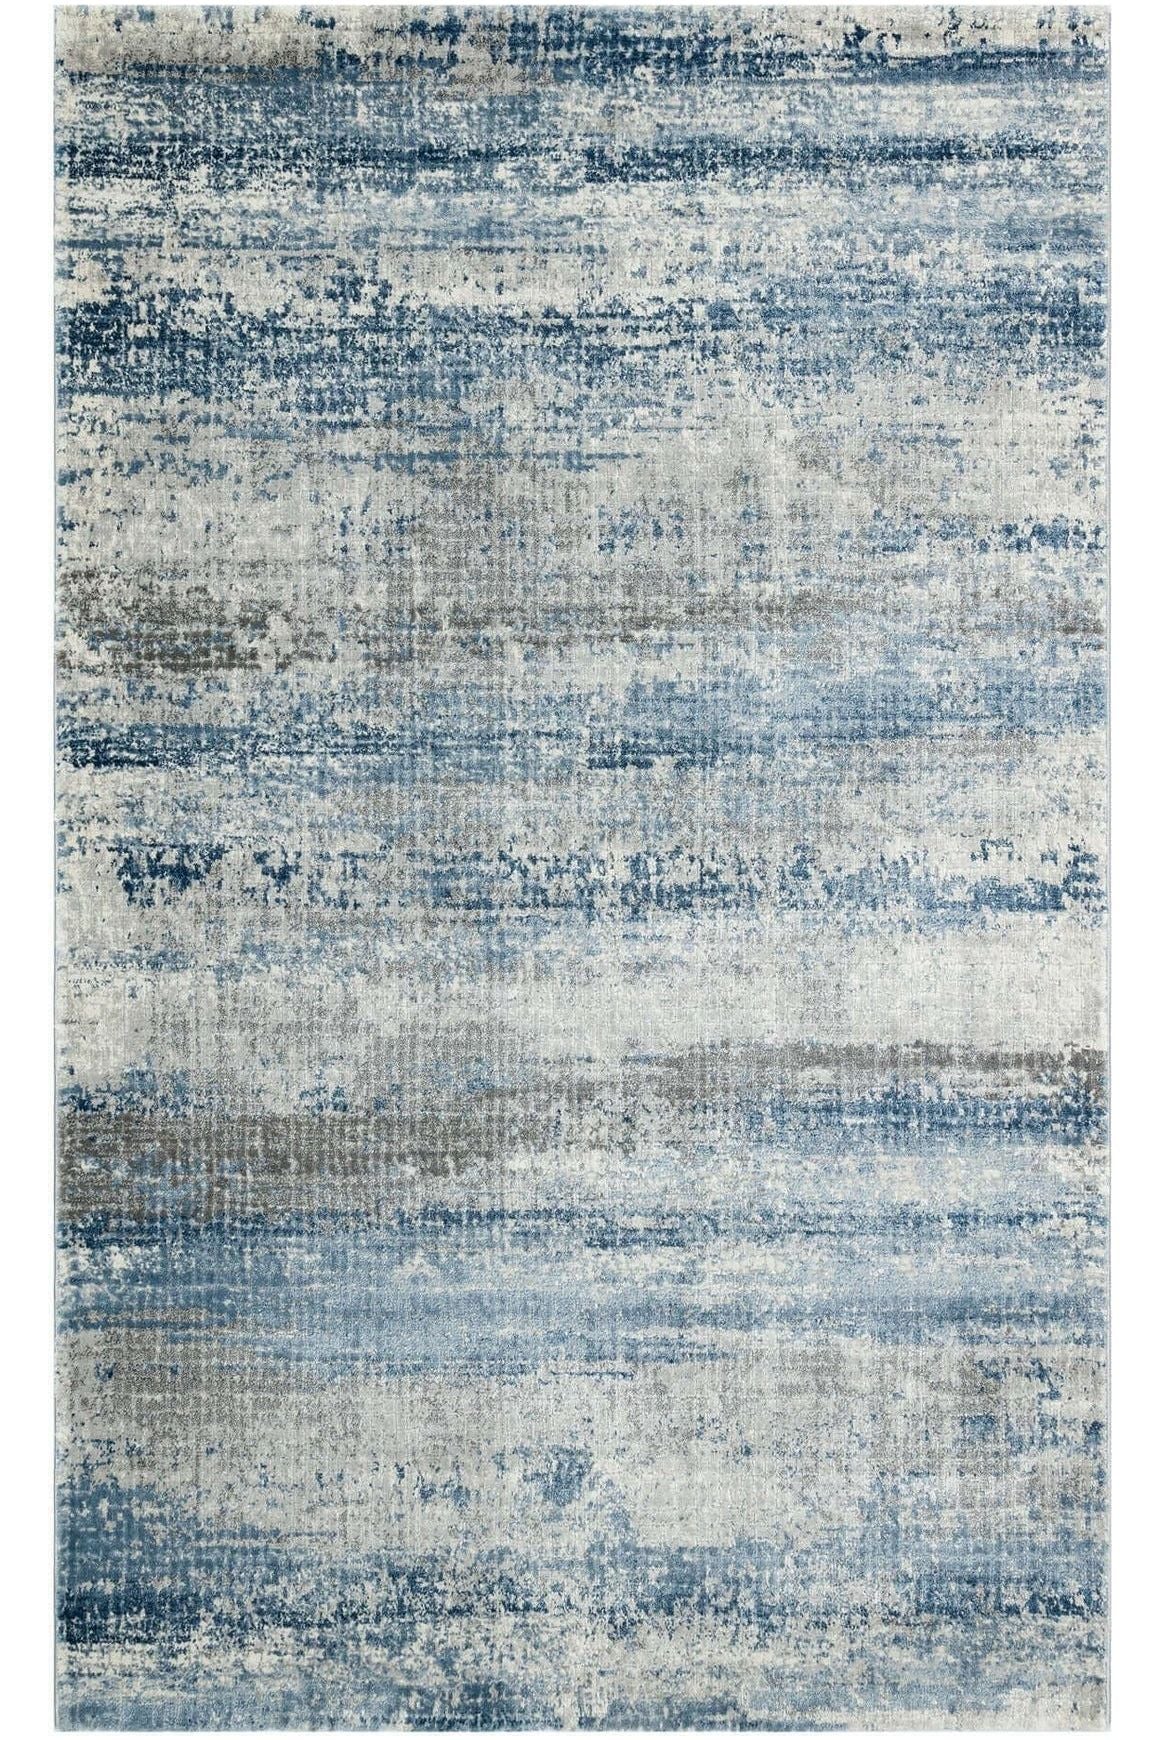 #Turkish_Carpets_Rugs# #Modern_Carpets# #Abrash_Carpets#Cm 11 Grey Blue Nw